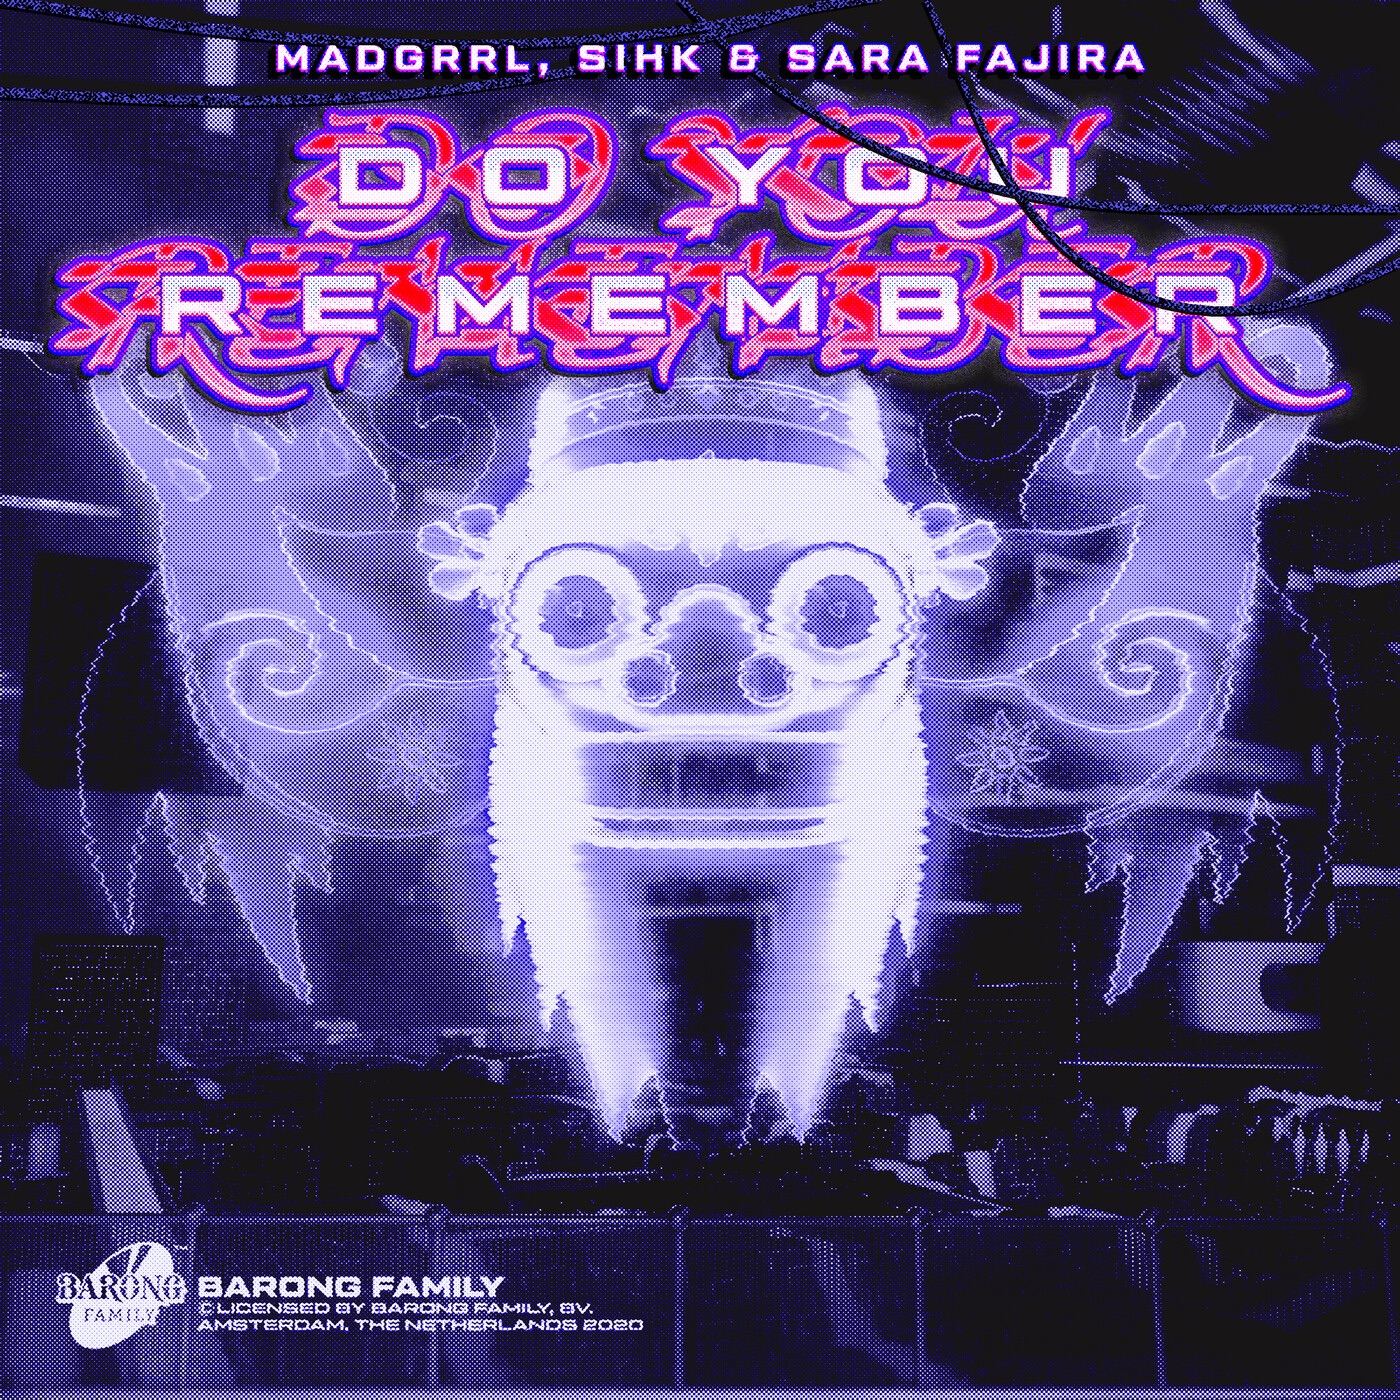 MADGRRL, Sihk & Sara Fajira - Do You Remember - Single